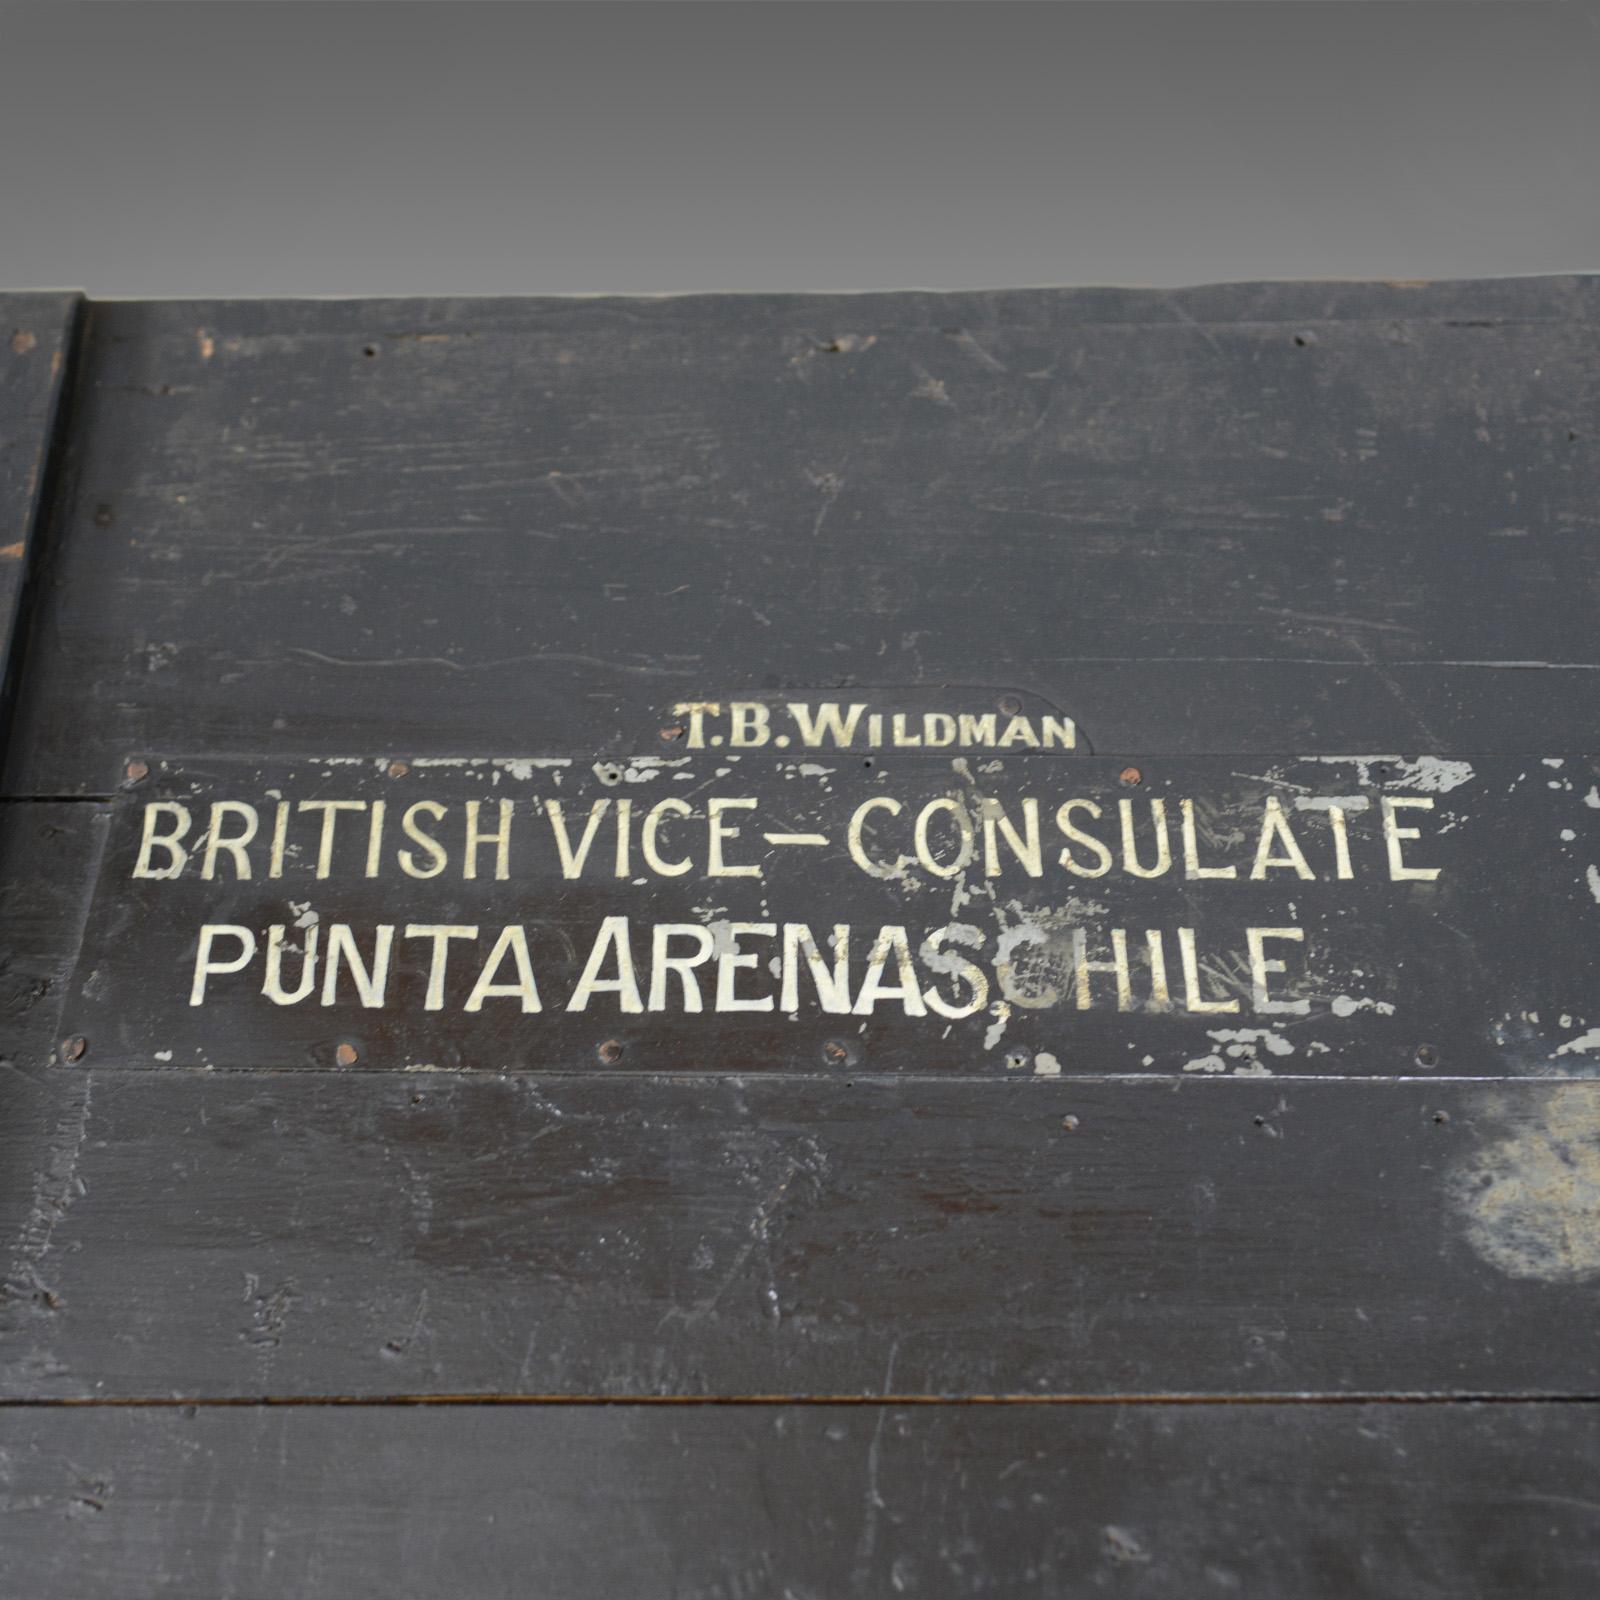 Pine Antique Steamer Trunk, Wildman, British Vice-Consulate, Chile, Ships Chest